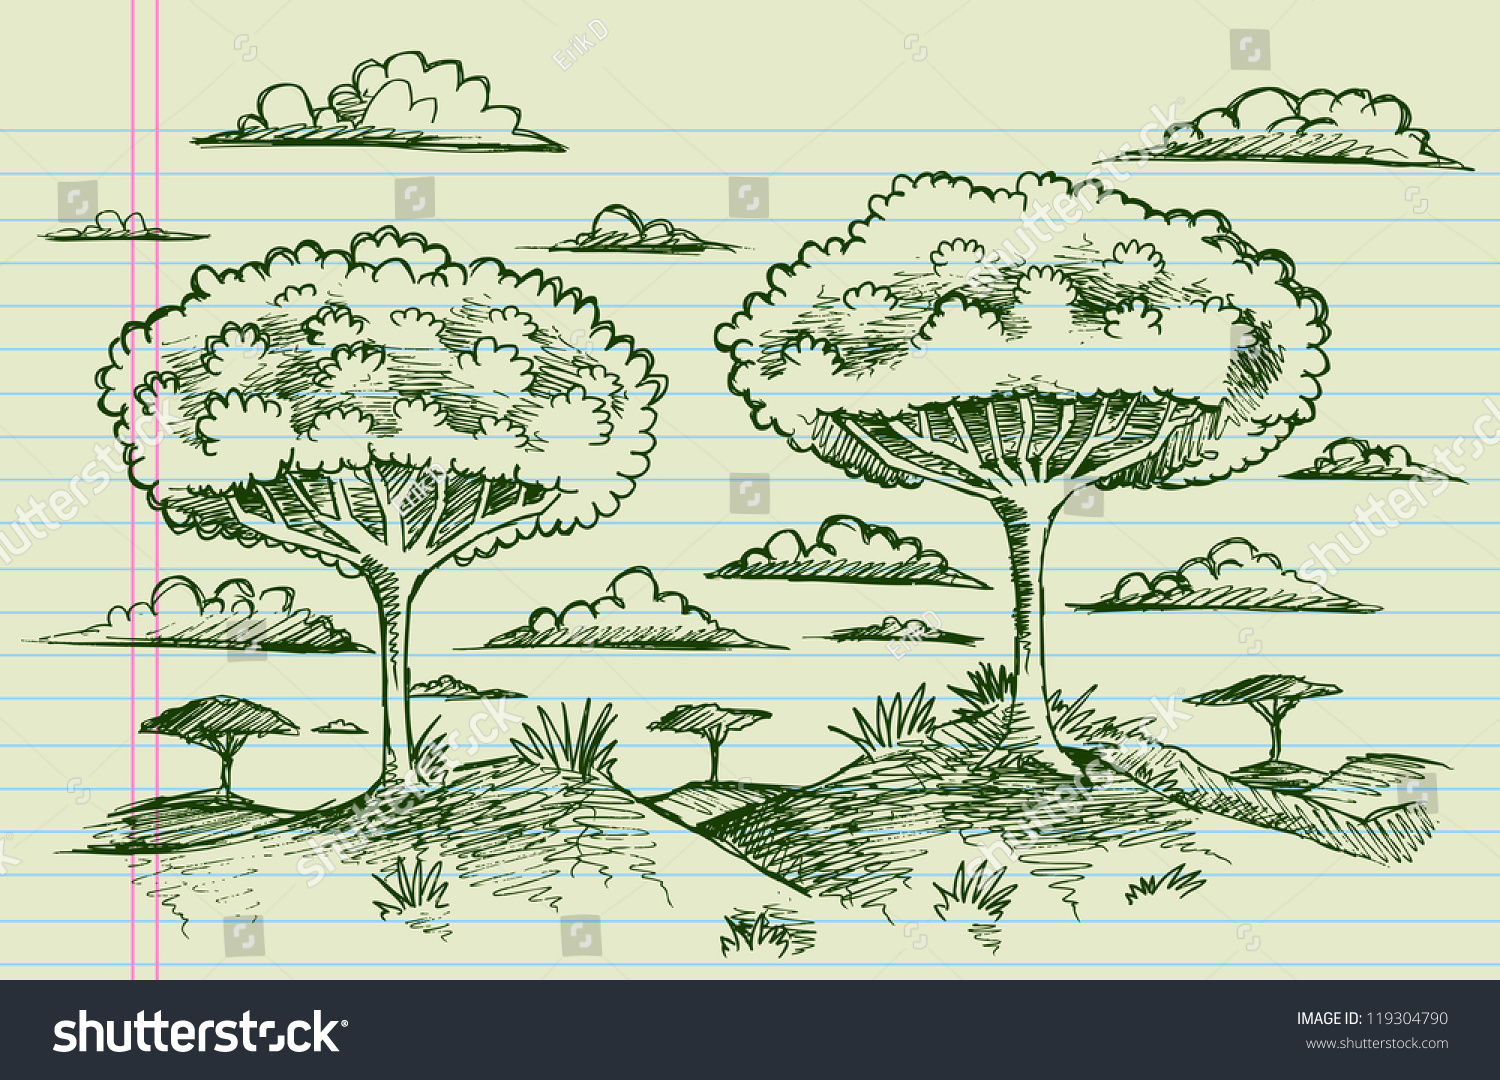 Savannah Forest Cartoon Landscape Sketch Doodle Vector - 119304790 ...